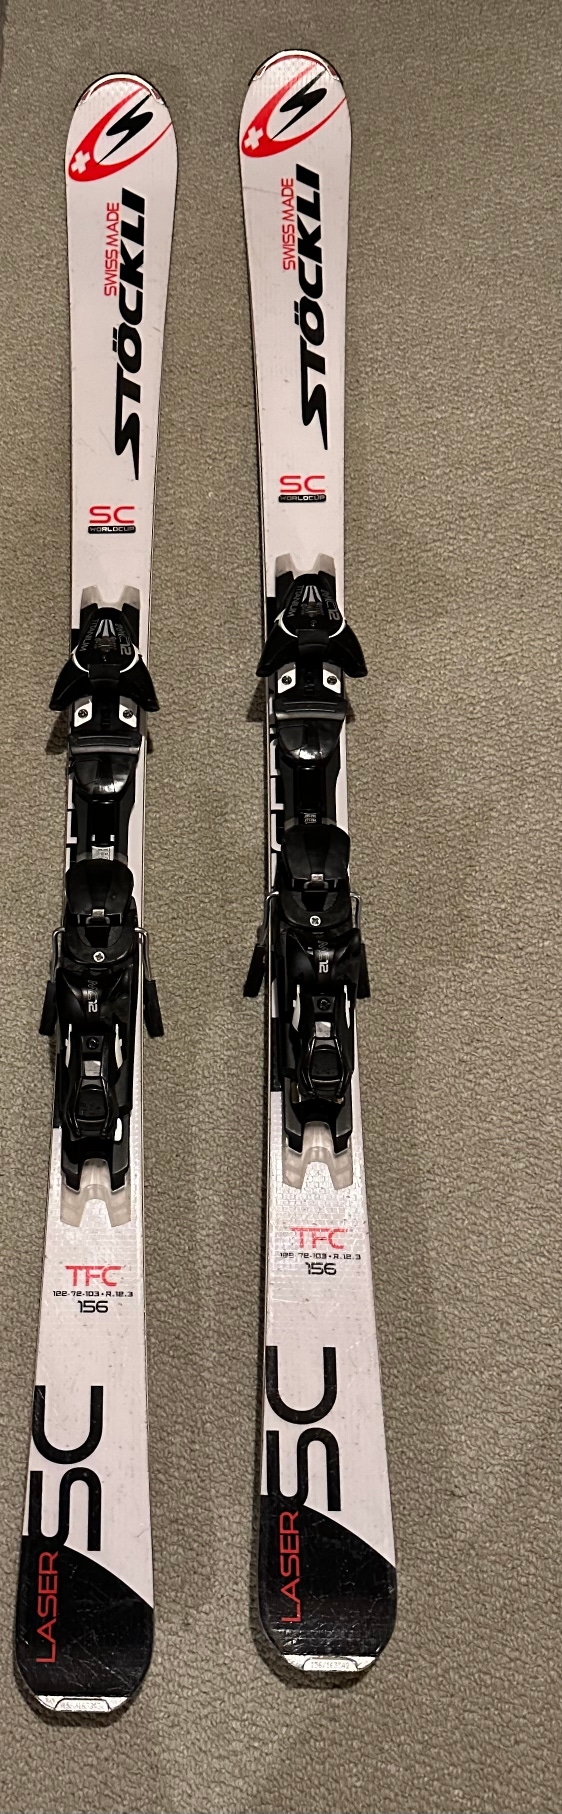 Stockli Laser SC 156 cm Swiss made skis with Salomon SM12 bindings